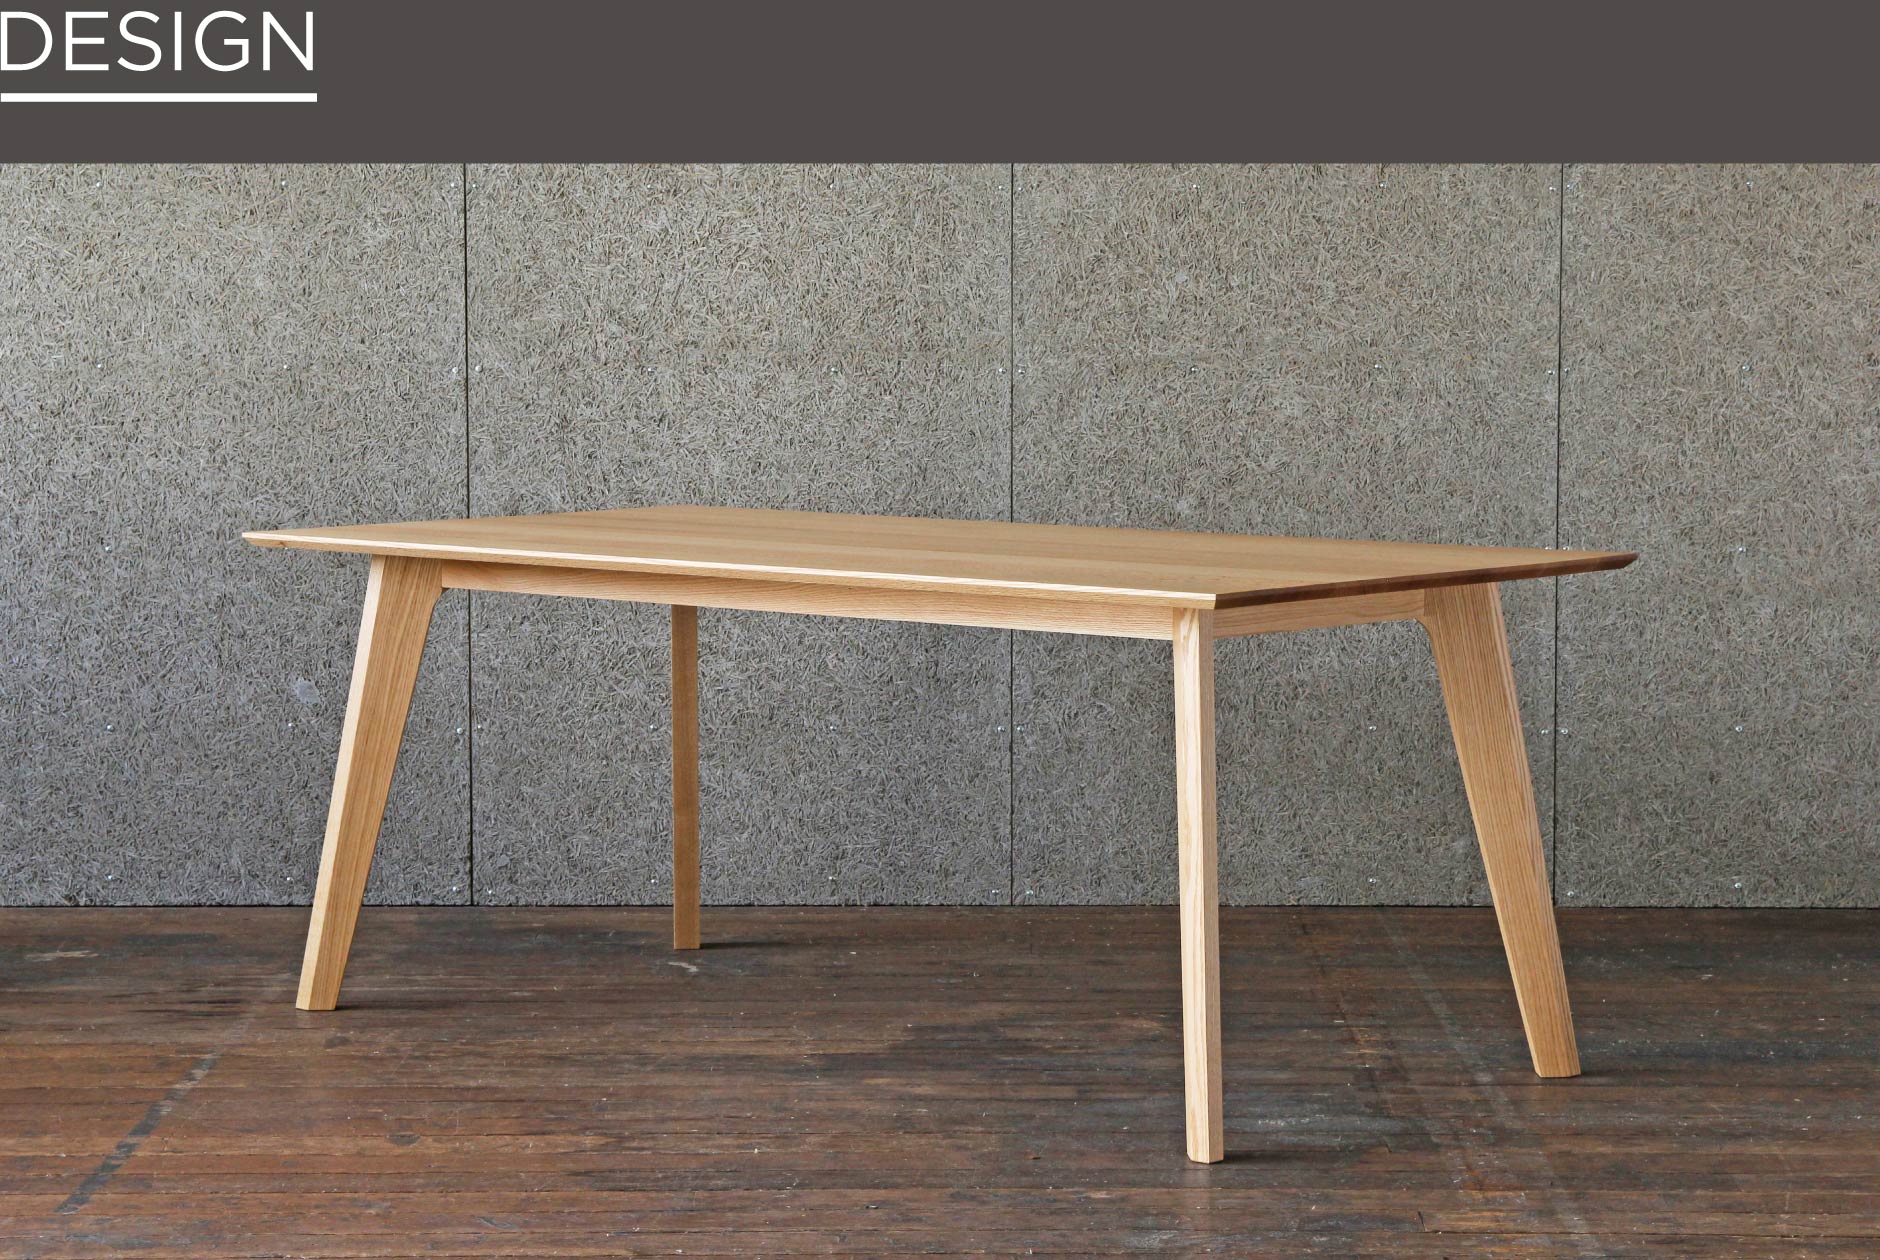 SOLID名古屋店が取り扱う家具の中でも軽やかな見た目のダイニングテーブル。脚がハノ字のようについており、シャープな印象です。